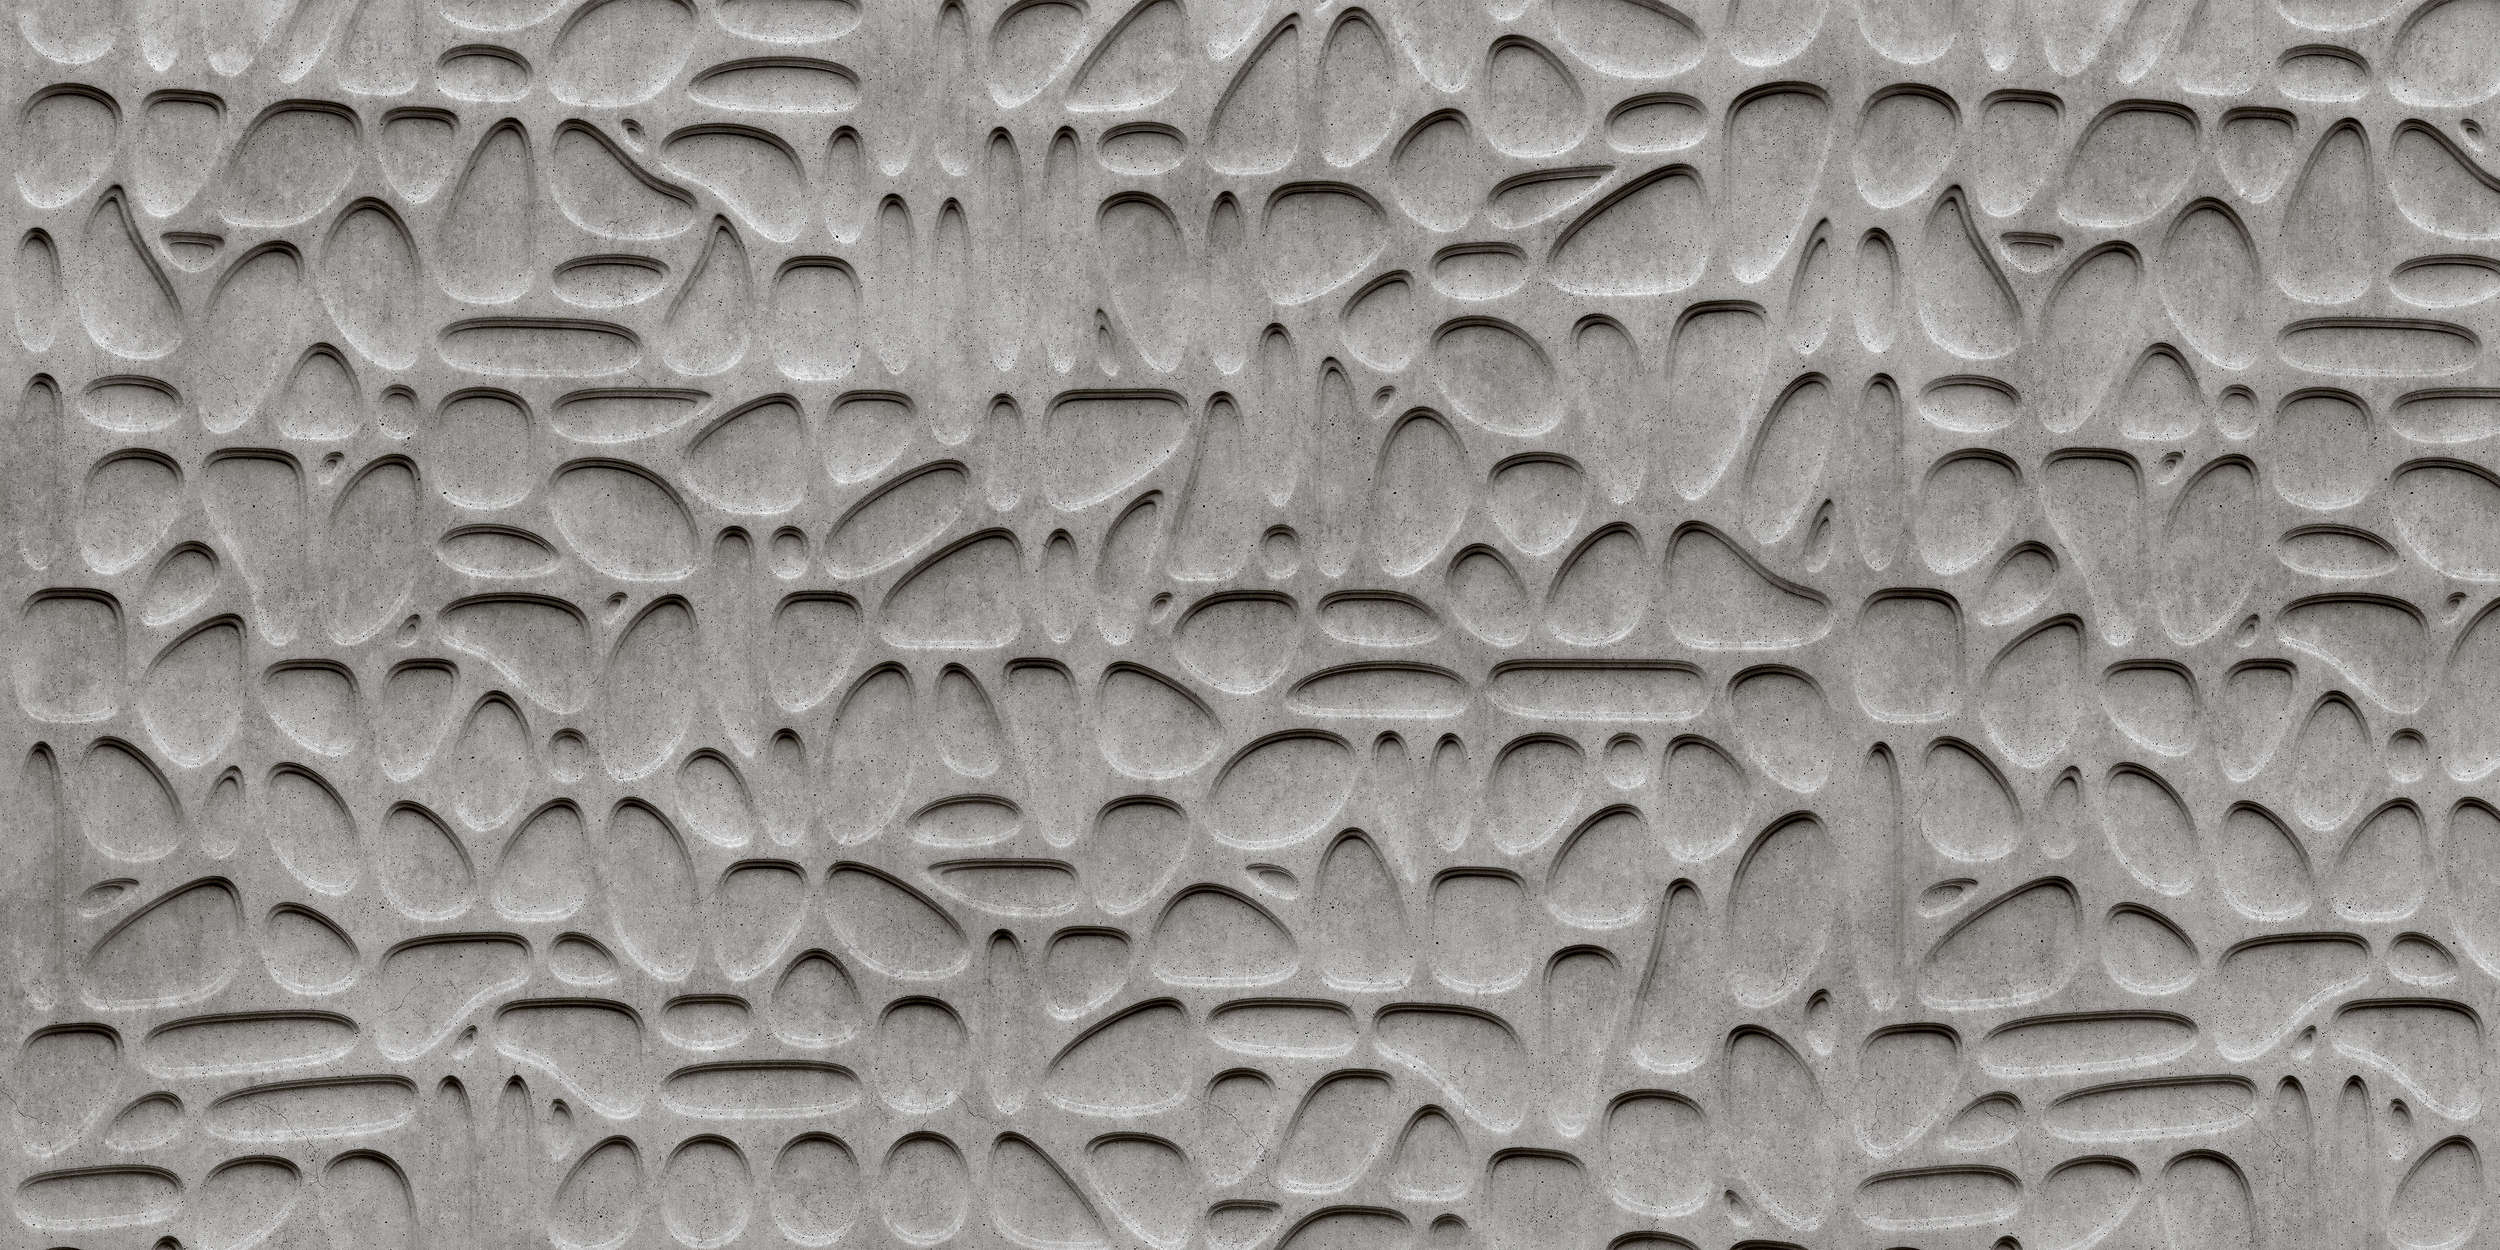             Maze 1 - Cool 3D Concrete Bubbles Wallpaper - Grey, Black | Textured Non-woven
        